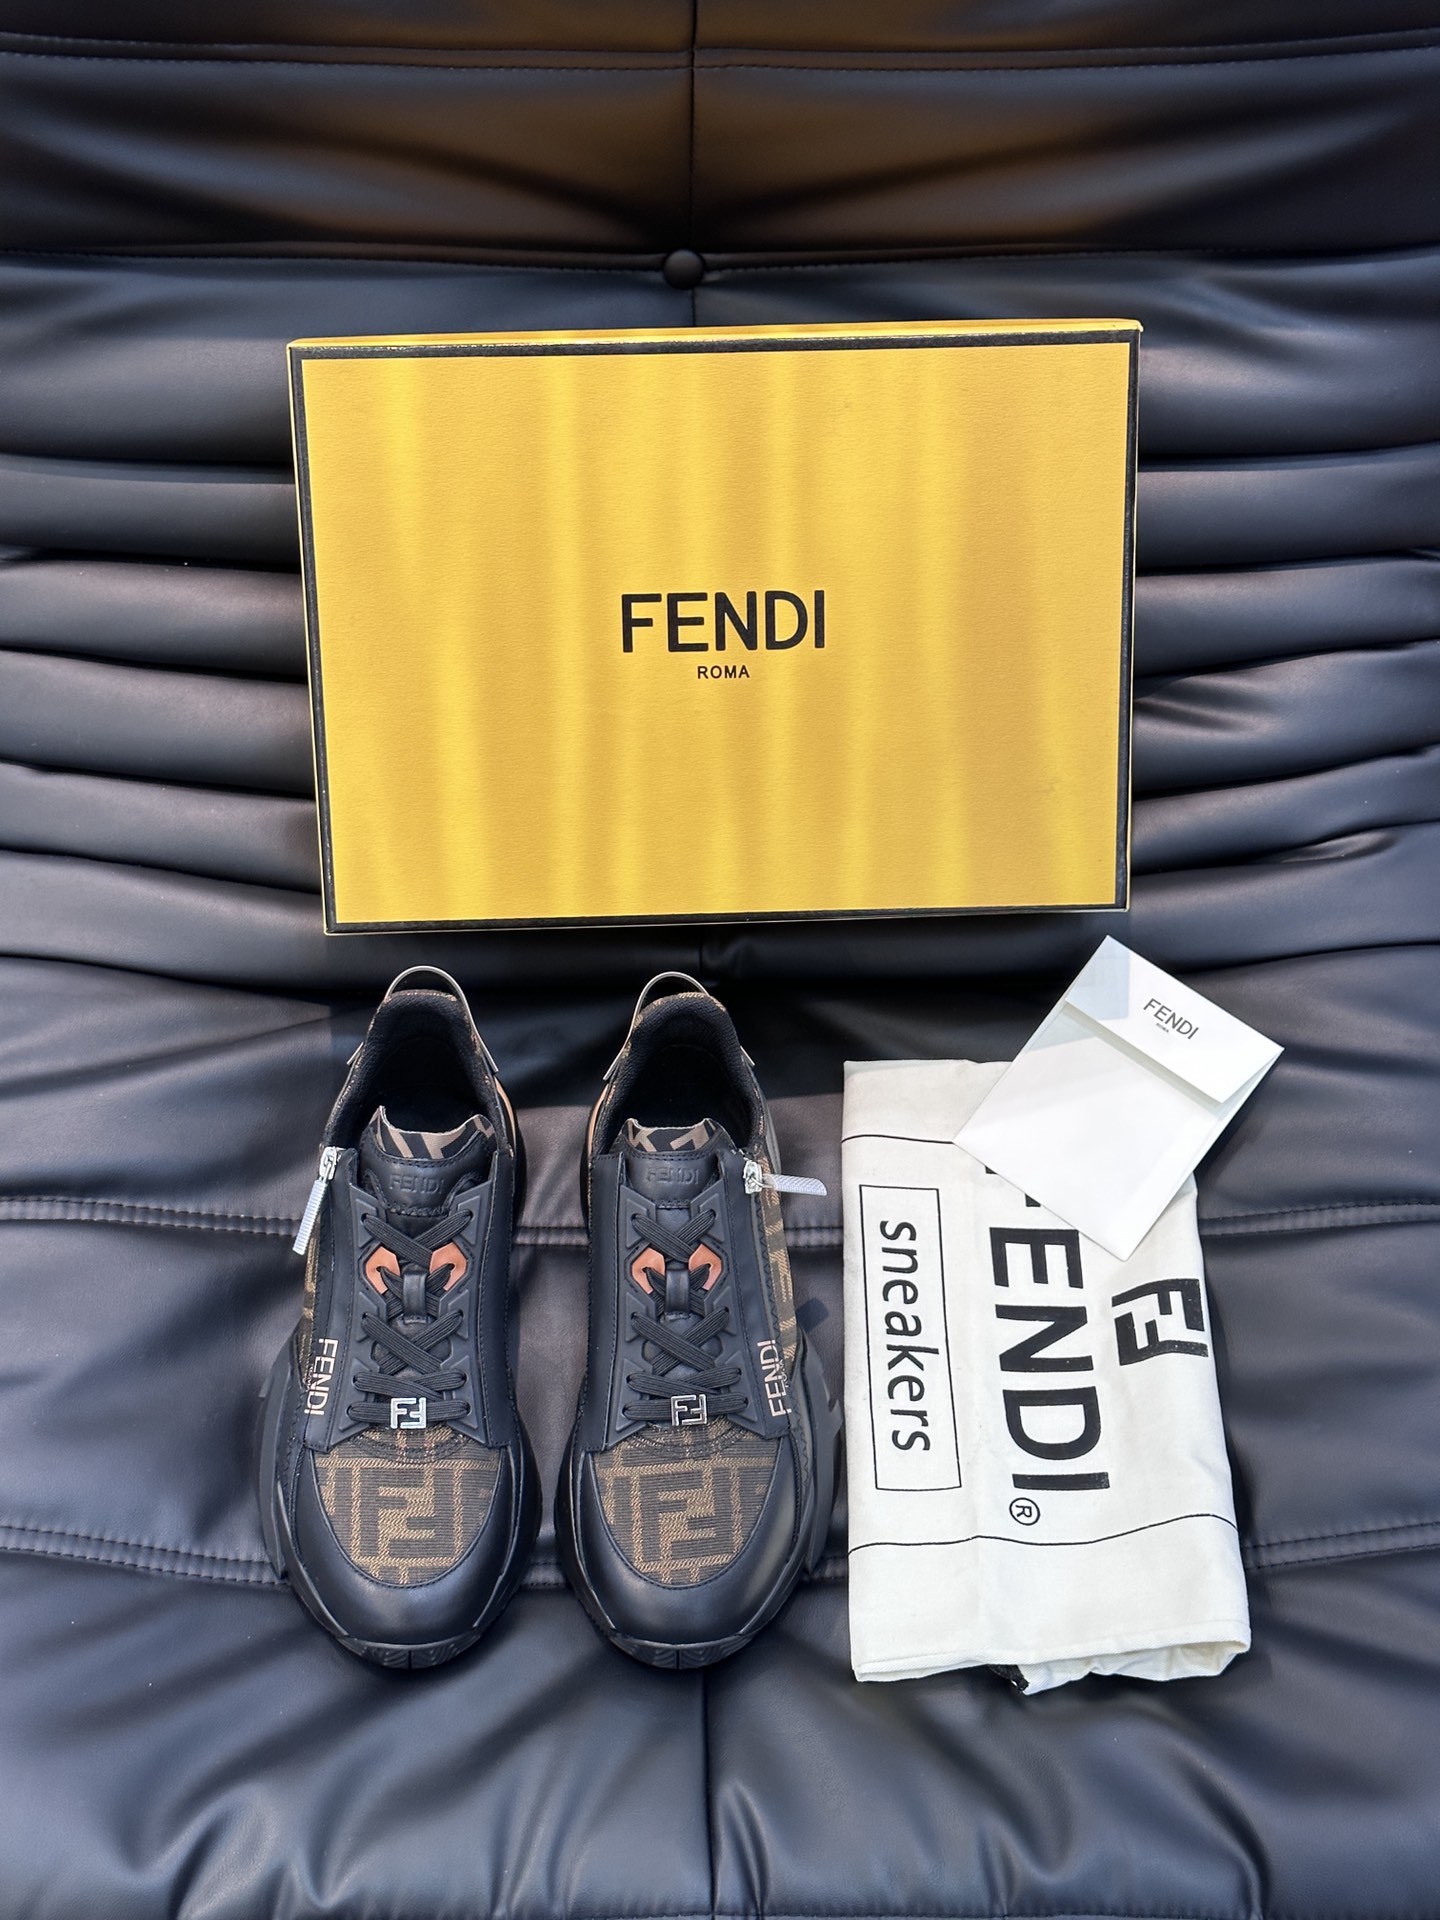 Fend*Flow男士休闲运动鞋搭配松紧带侧拉链刻有F的波纹鞋底鞋跟饰有凸纹FendiFlow字样高科技